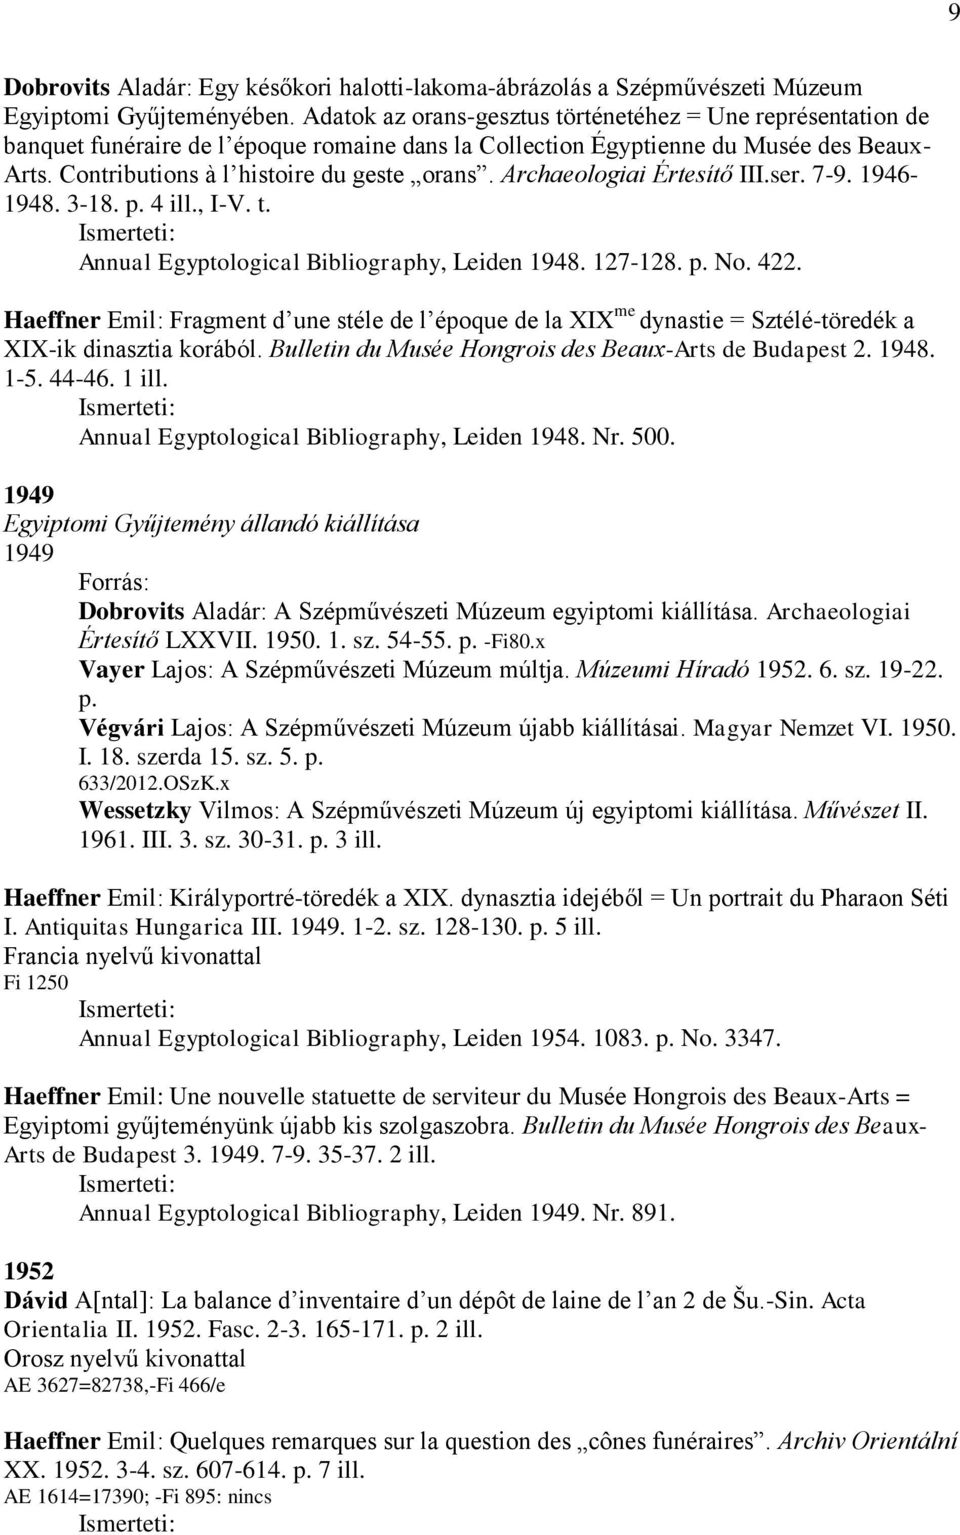 Archaeologiai Értesítő III.ser. 7-9. 1946-1948. 3-18. p. 4 ill., I-V. t. Annual Egyptological Bibliography, Leiden 1948. 127-128. p. No. 422.